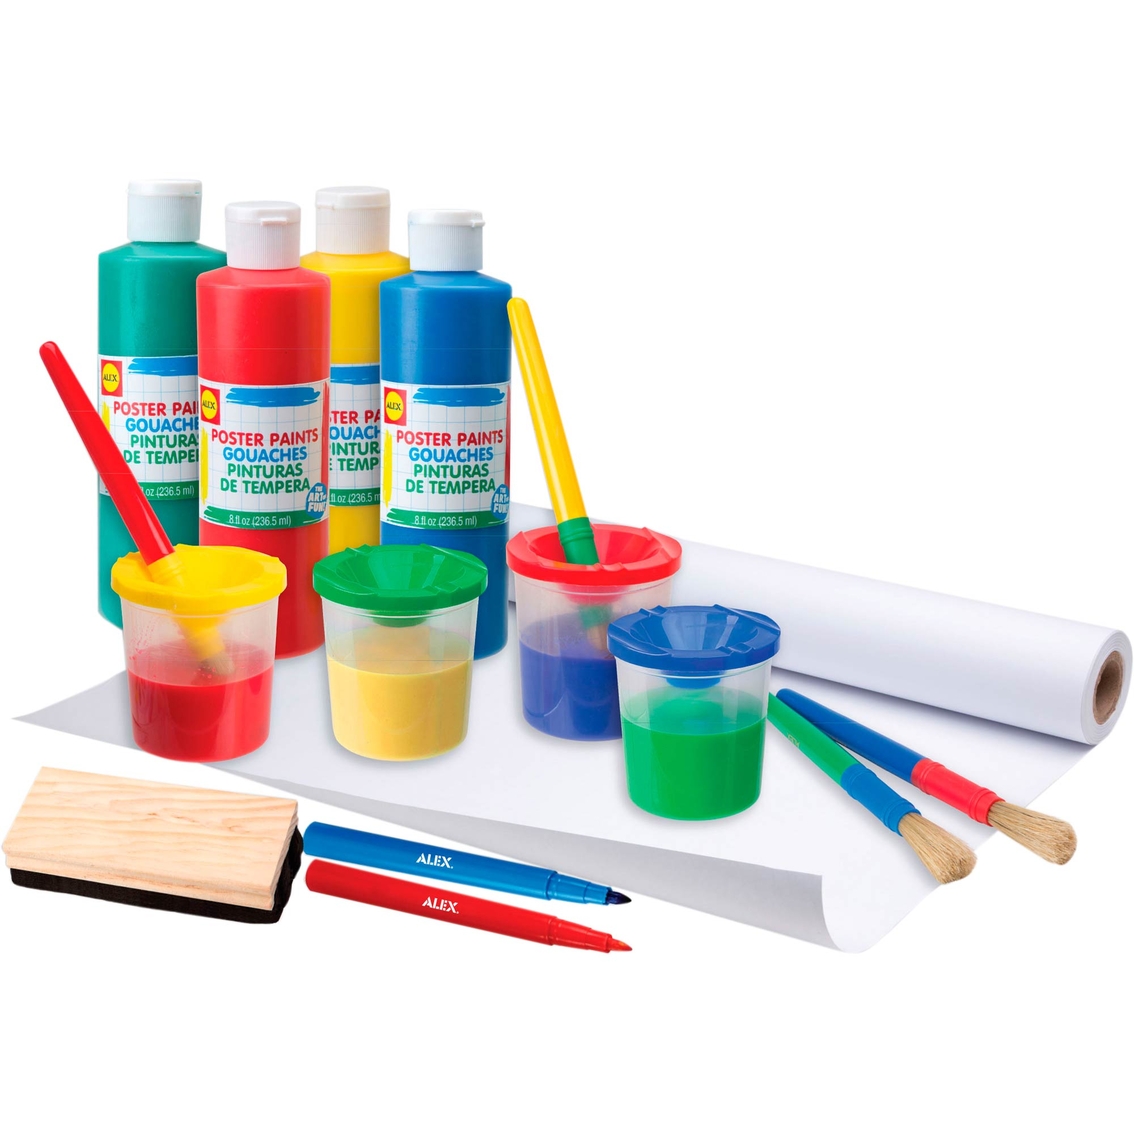 Melissa & Doug Easel Accessory Set - Paint, Cups, Brushes, Chalk